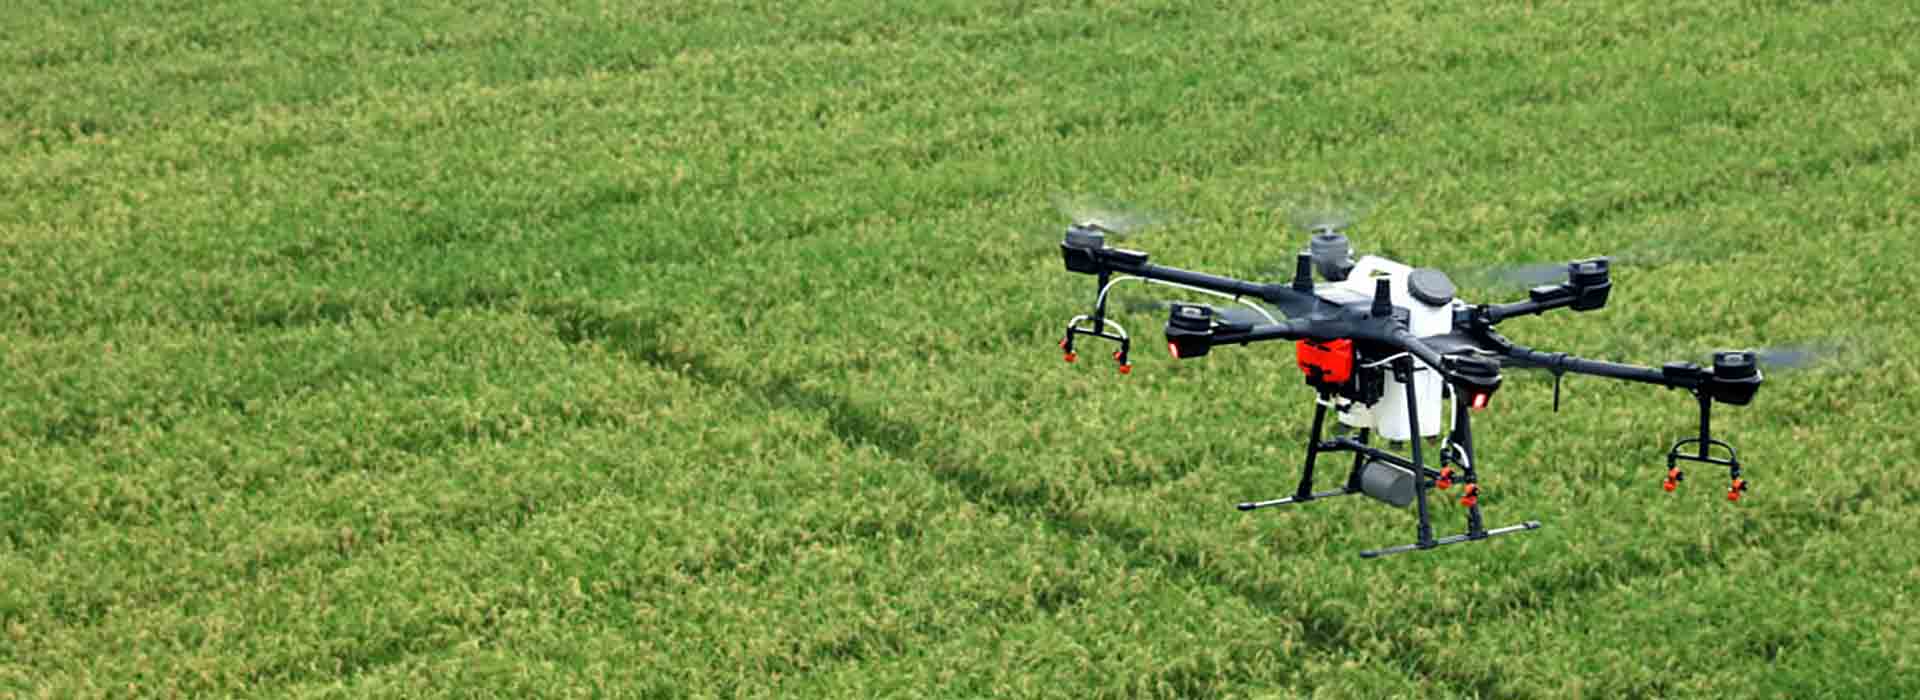 DJI Agras 16 drone for spraying